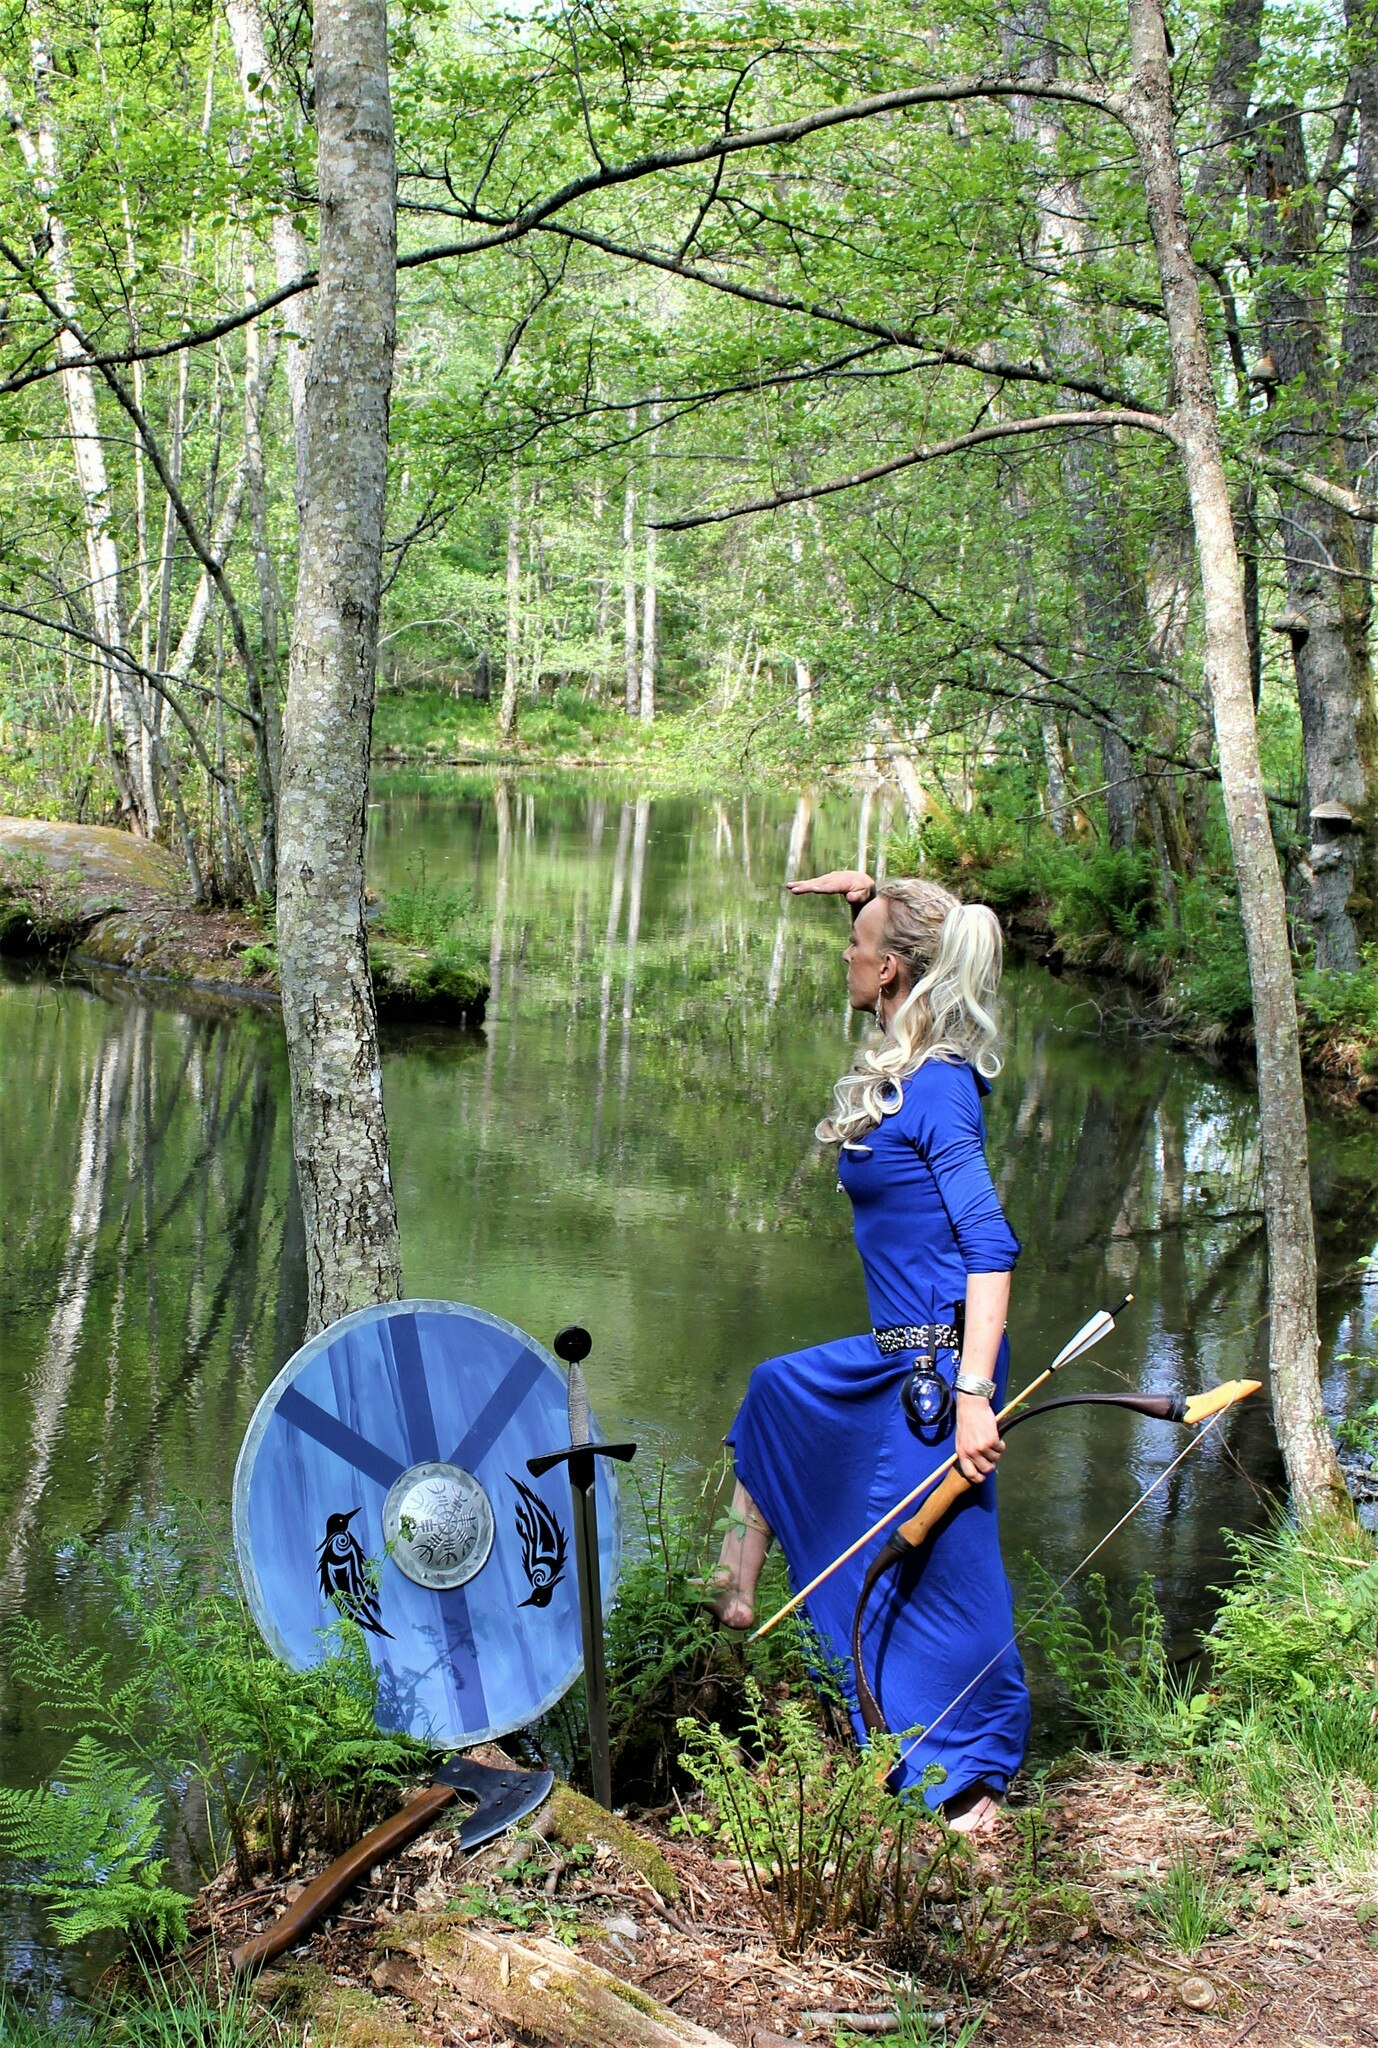 vikinga klänning med blå vikinga sköld, ryttarbåge, kast yxa samt svärd, viking dress